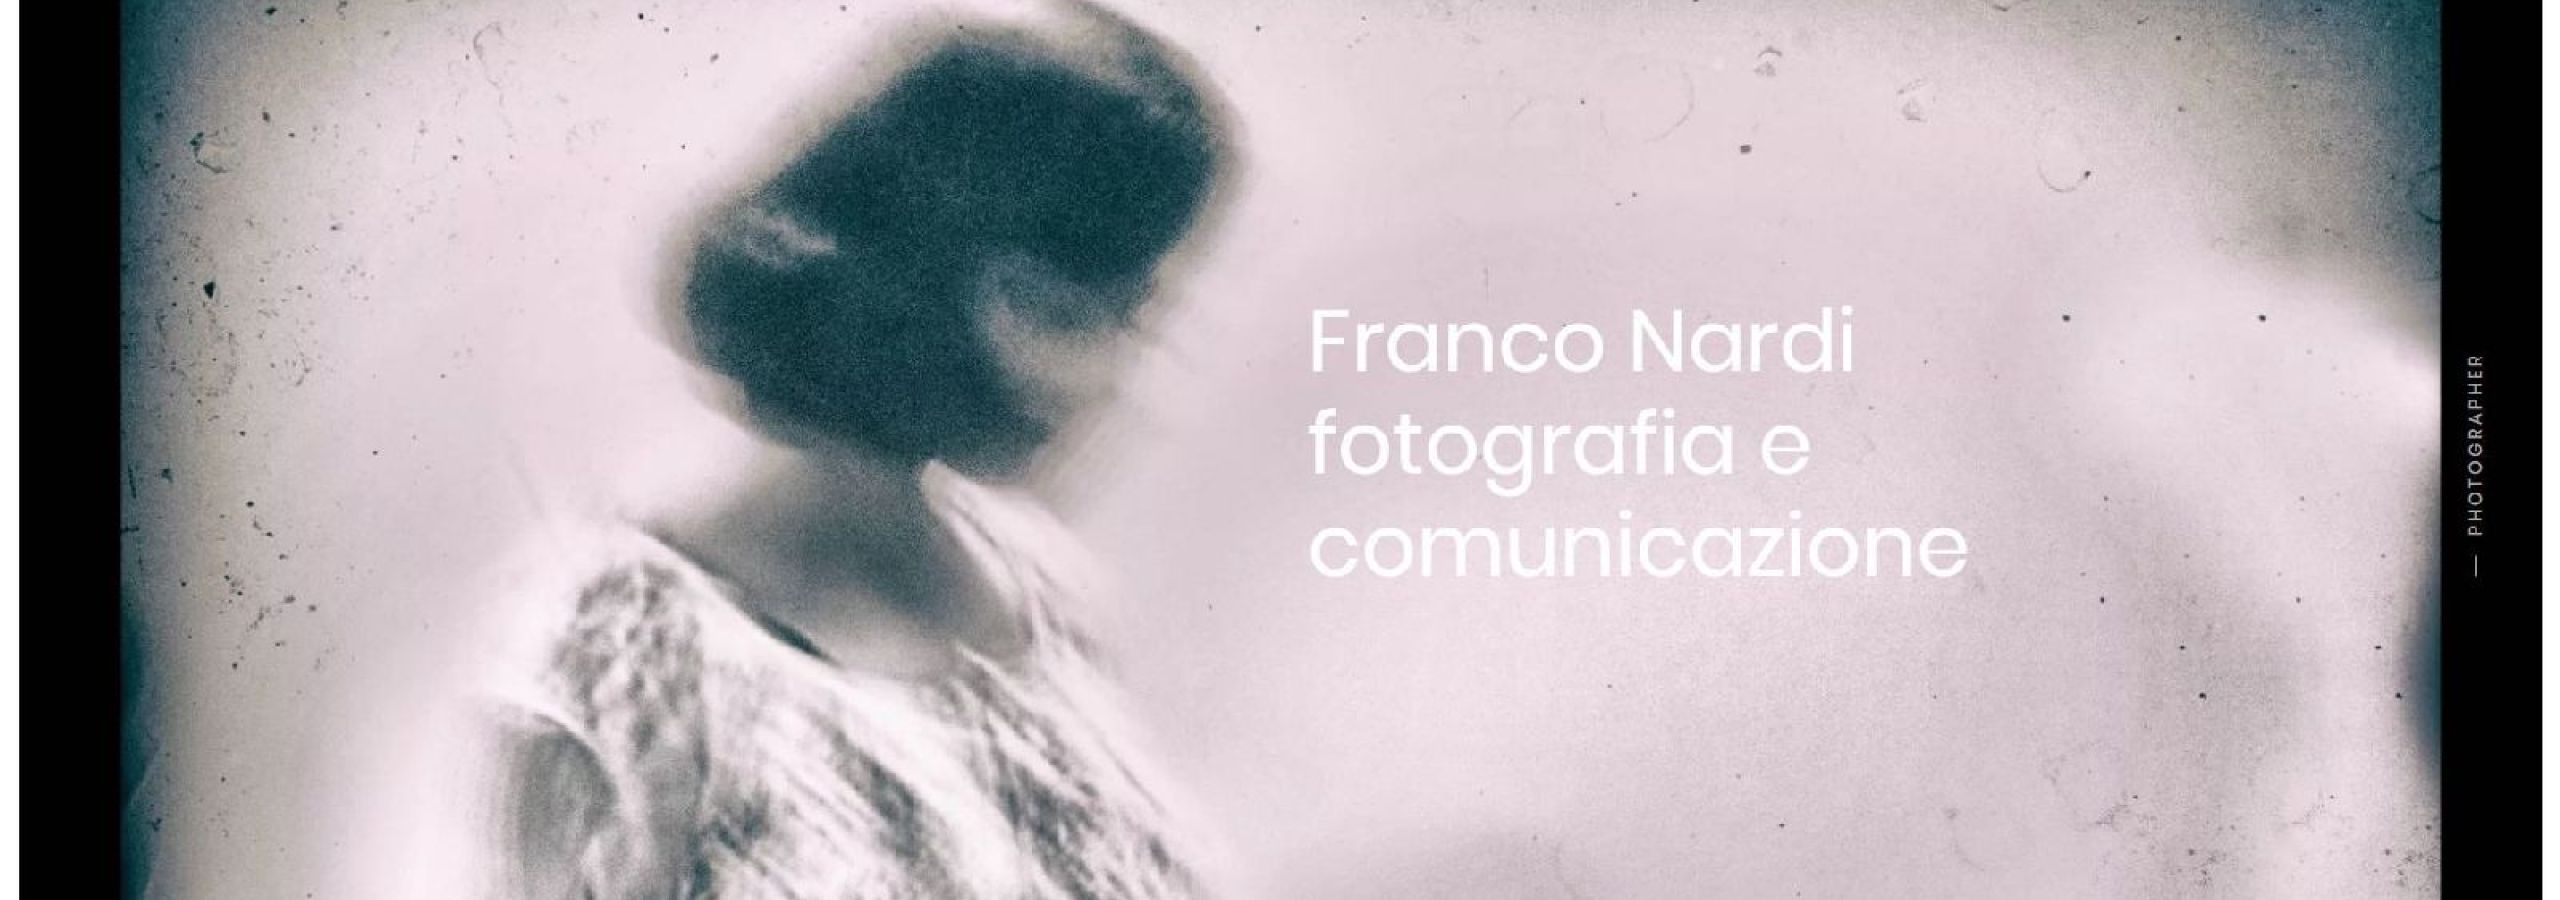 Sito Studio fotografico Franco Nardi